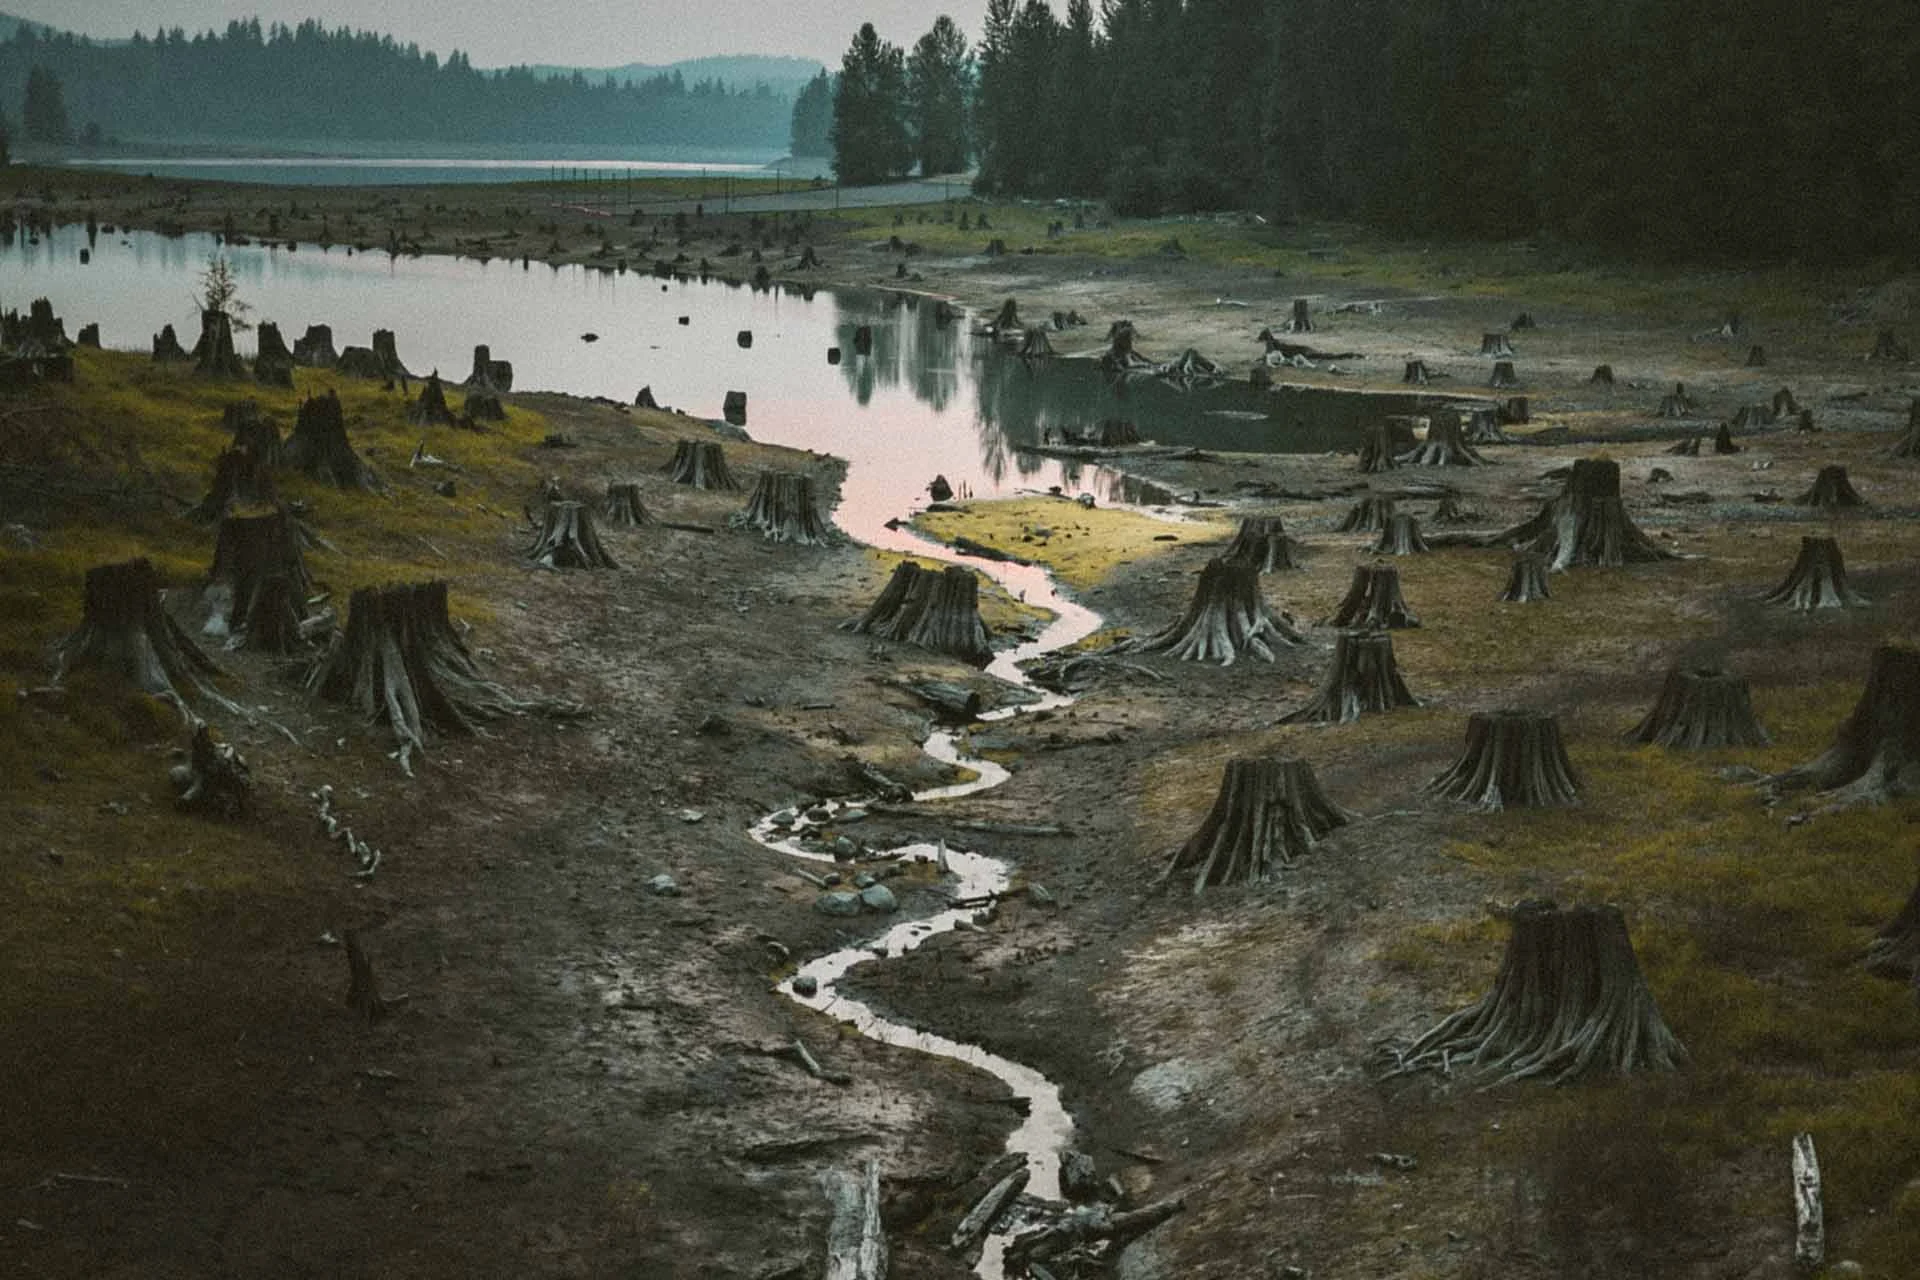 Cut trees along the water in Seattle, Washington